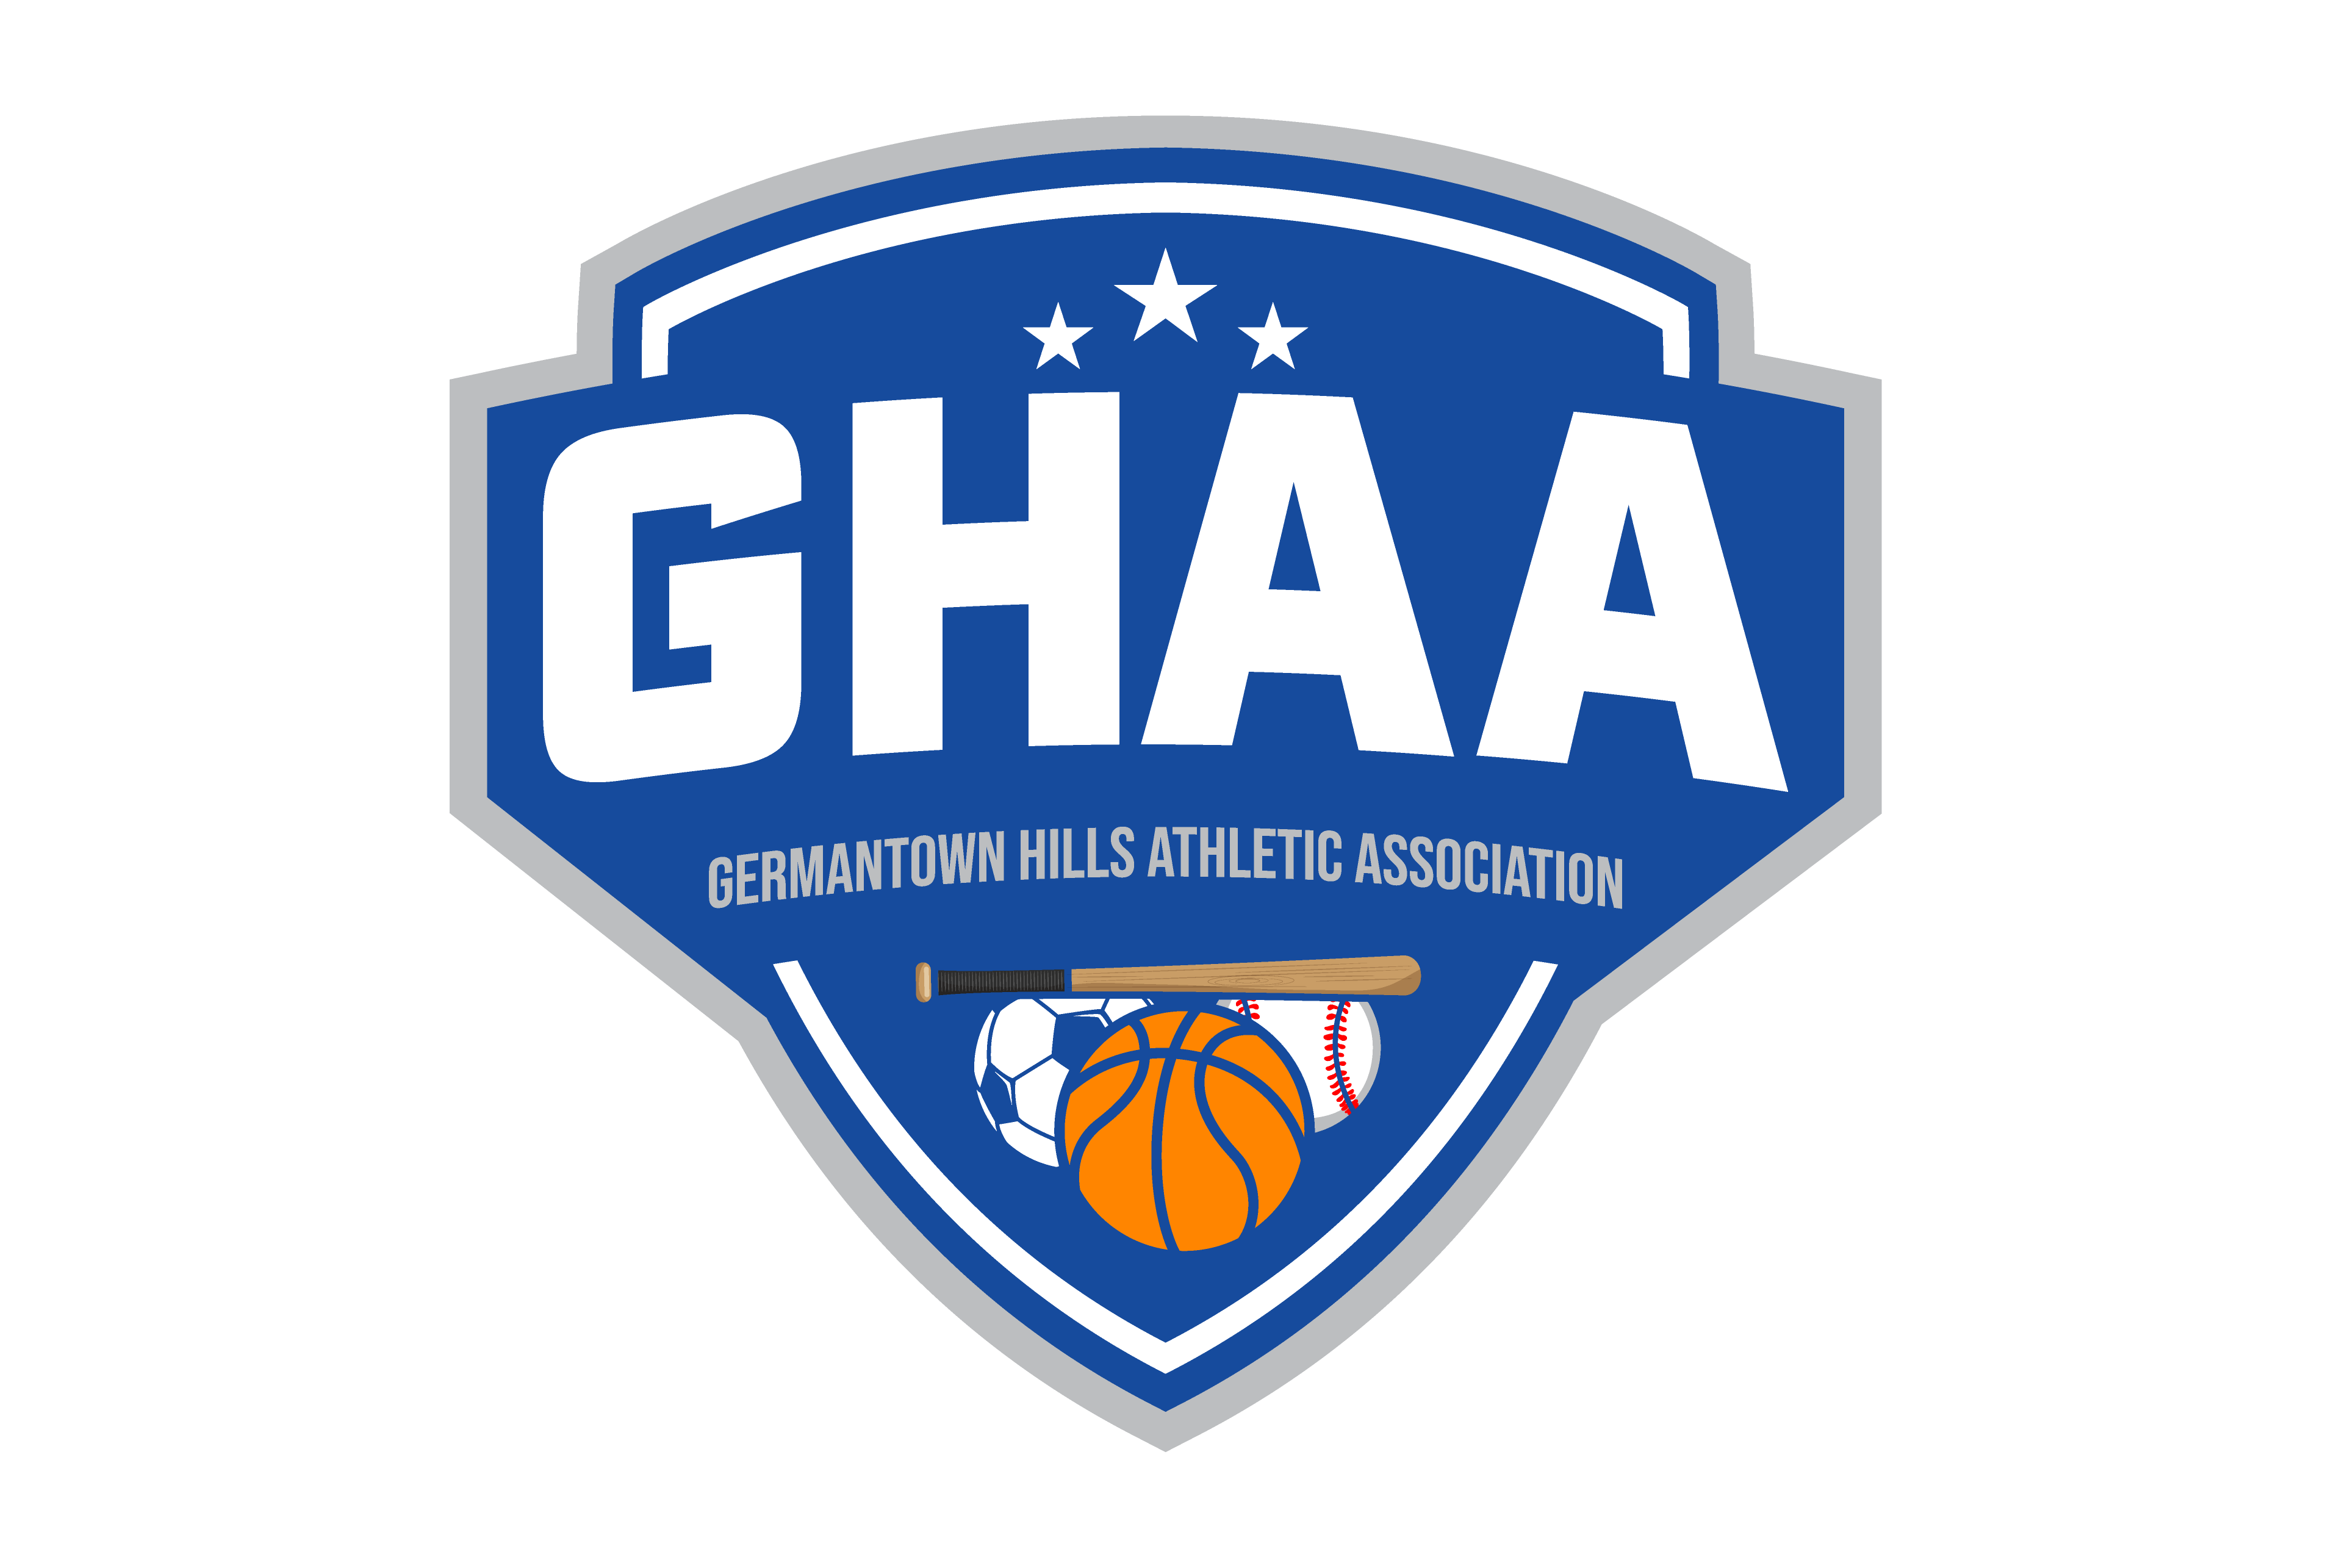 Germantown Hills Athletic Association (GHAA)